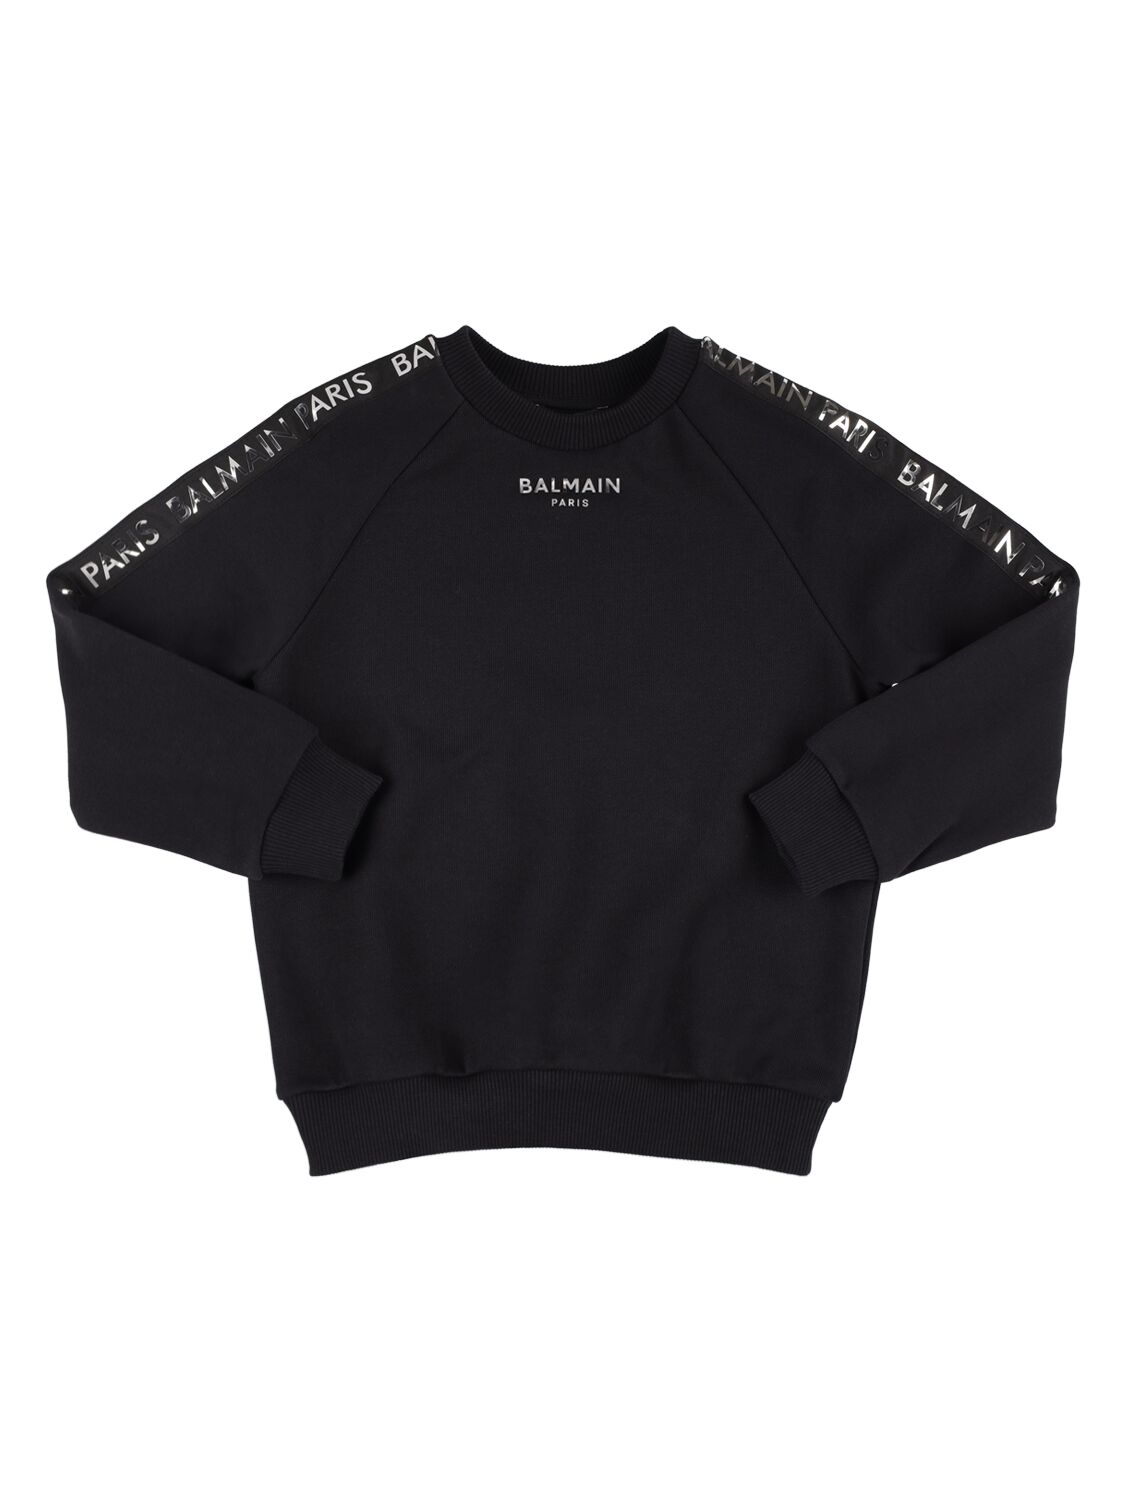 Balmain Kids' Organic Cotton Sweatshirt In Black